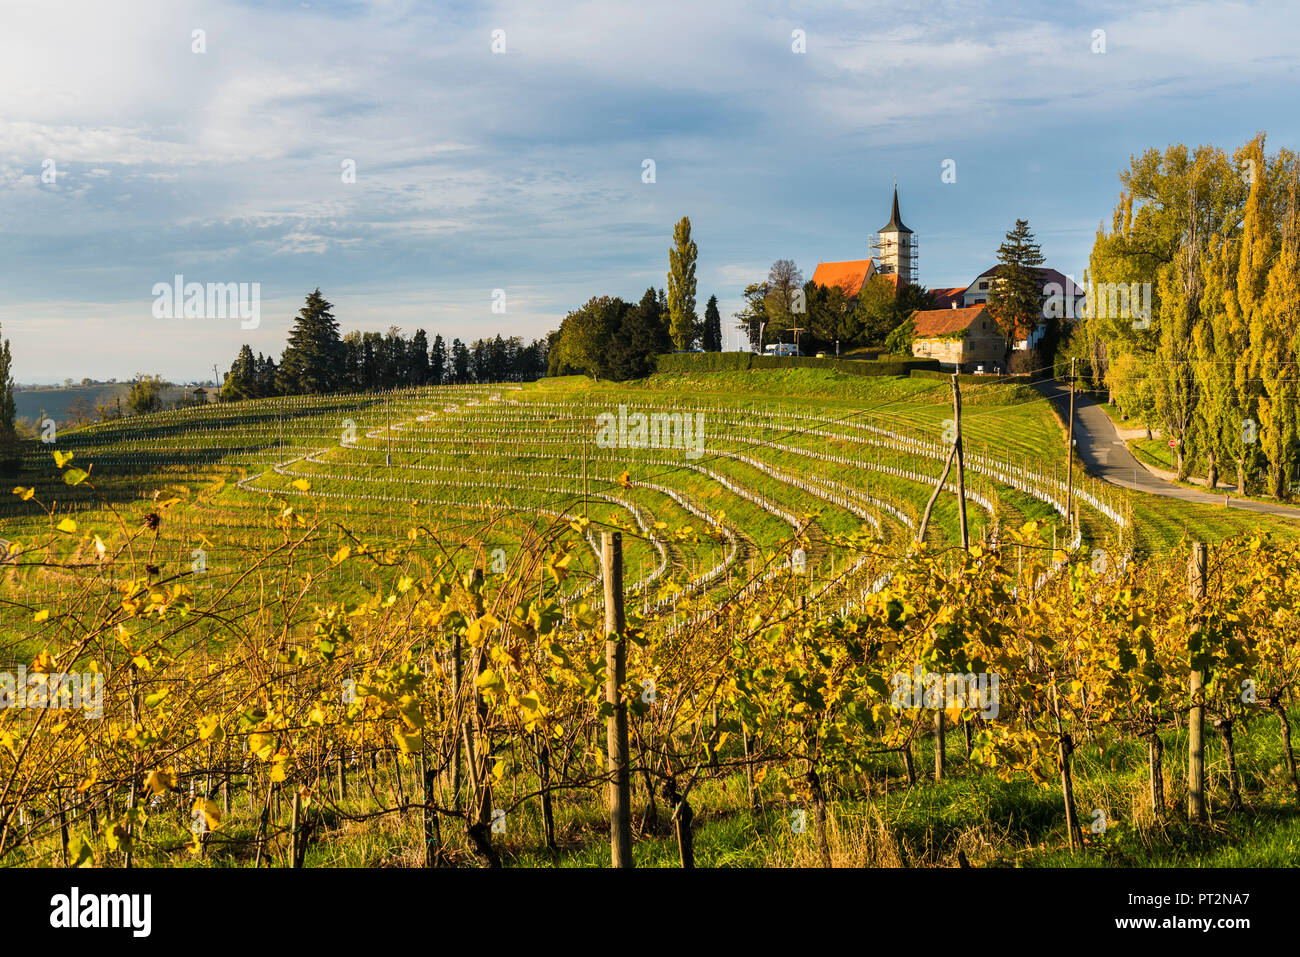 Jeruzalem village and its vineyards, Jeruzalem, Ljutomer, Mura region, Slovenia Stock Photo